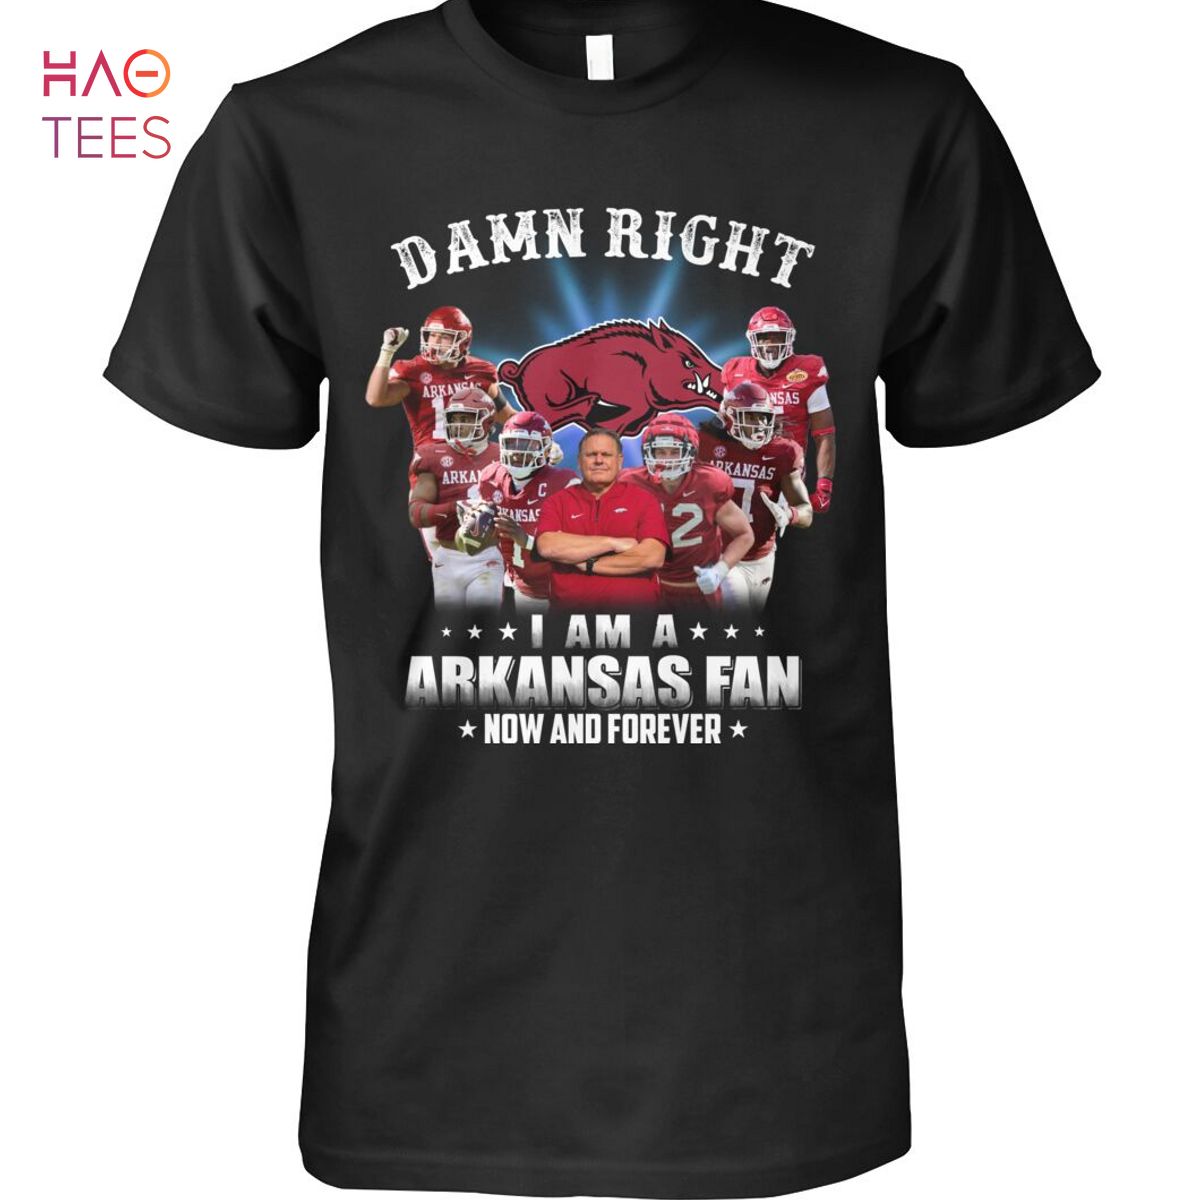 HOT Arkansas Fan Shirt Limited Edition